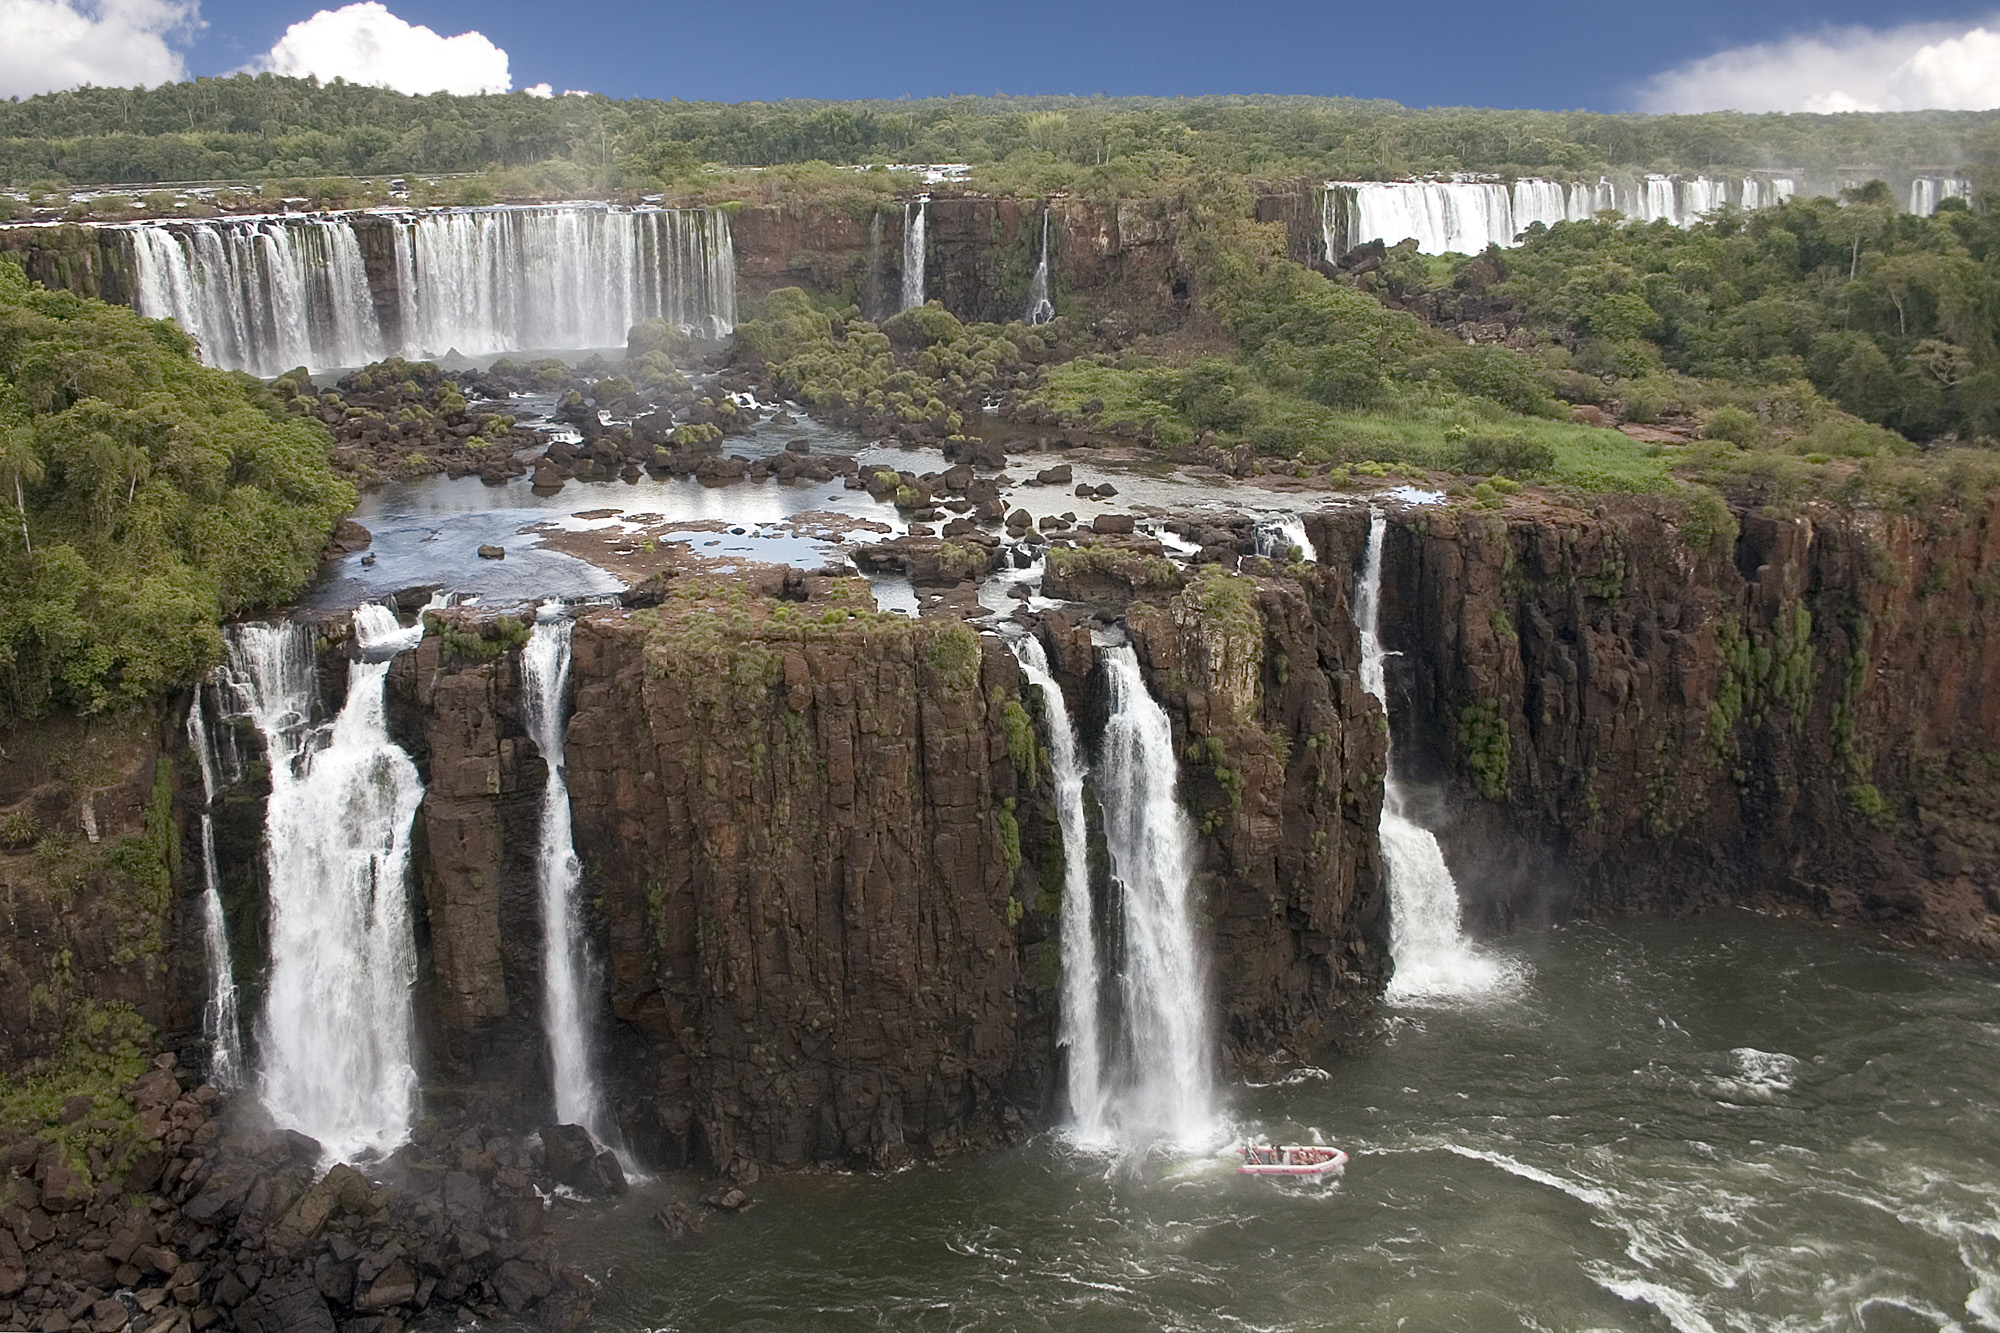 Откуда водопад. Водопады: Анхель и Игуасу.. Катаратас дель Игуасу. Водопады Игуасу (Cataratas do Iguaçu).